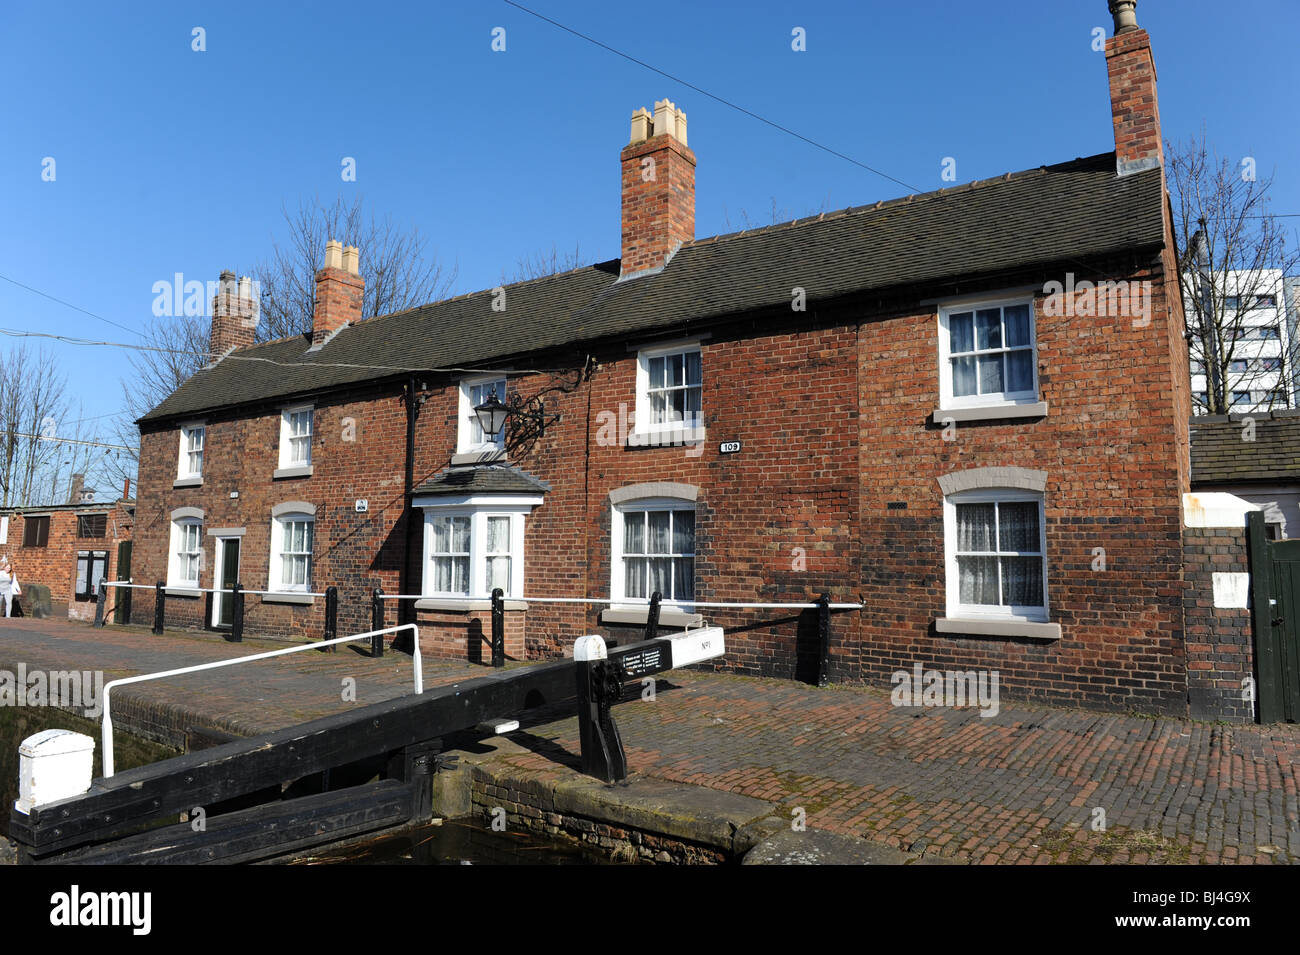 Sperren Sie Keepers Ferienhäuser am Kanal am breiten Street Basin Wolverhampton Uk Stockfoto